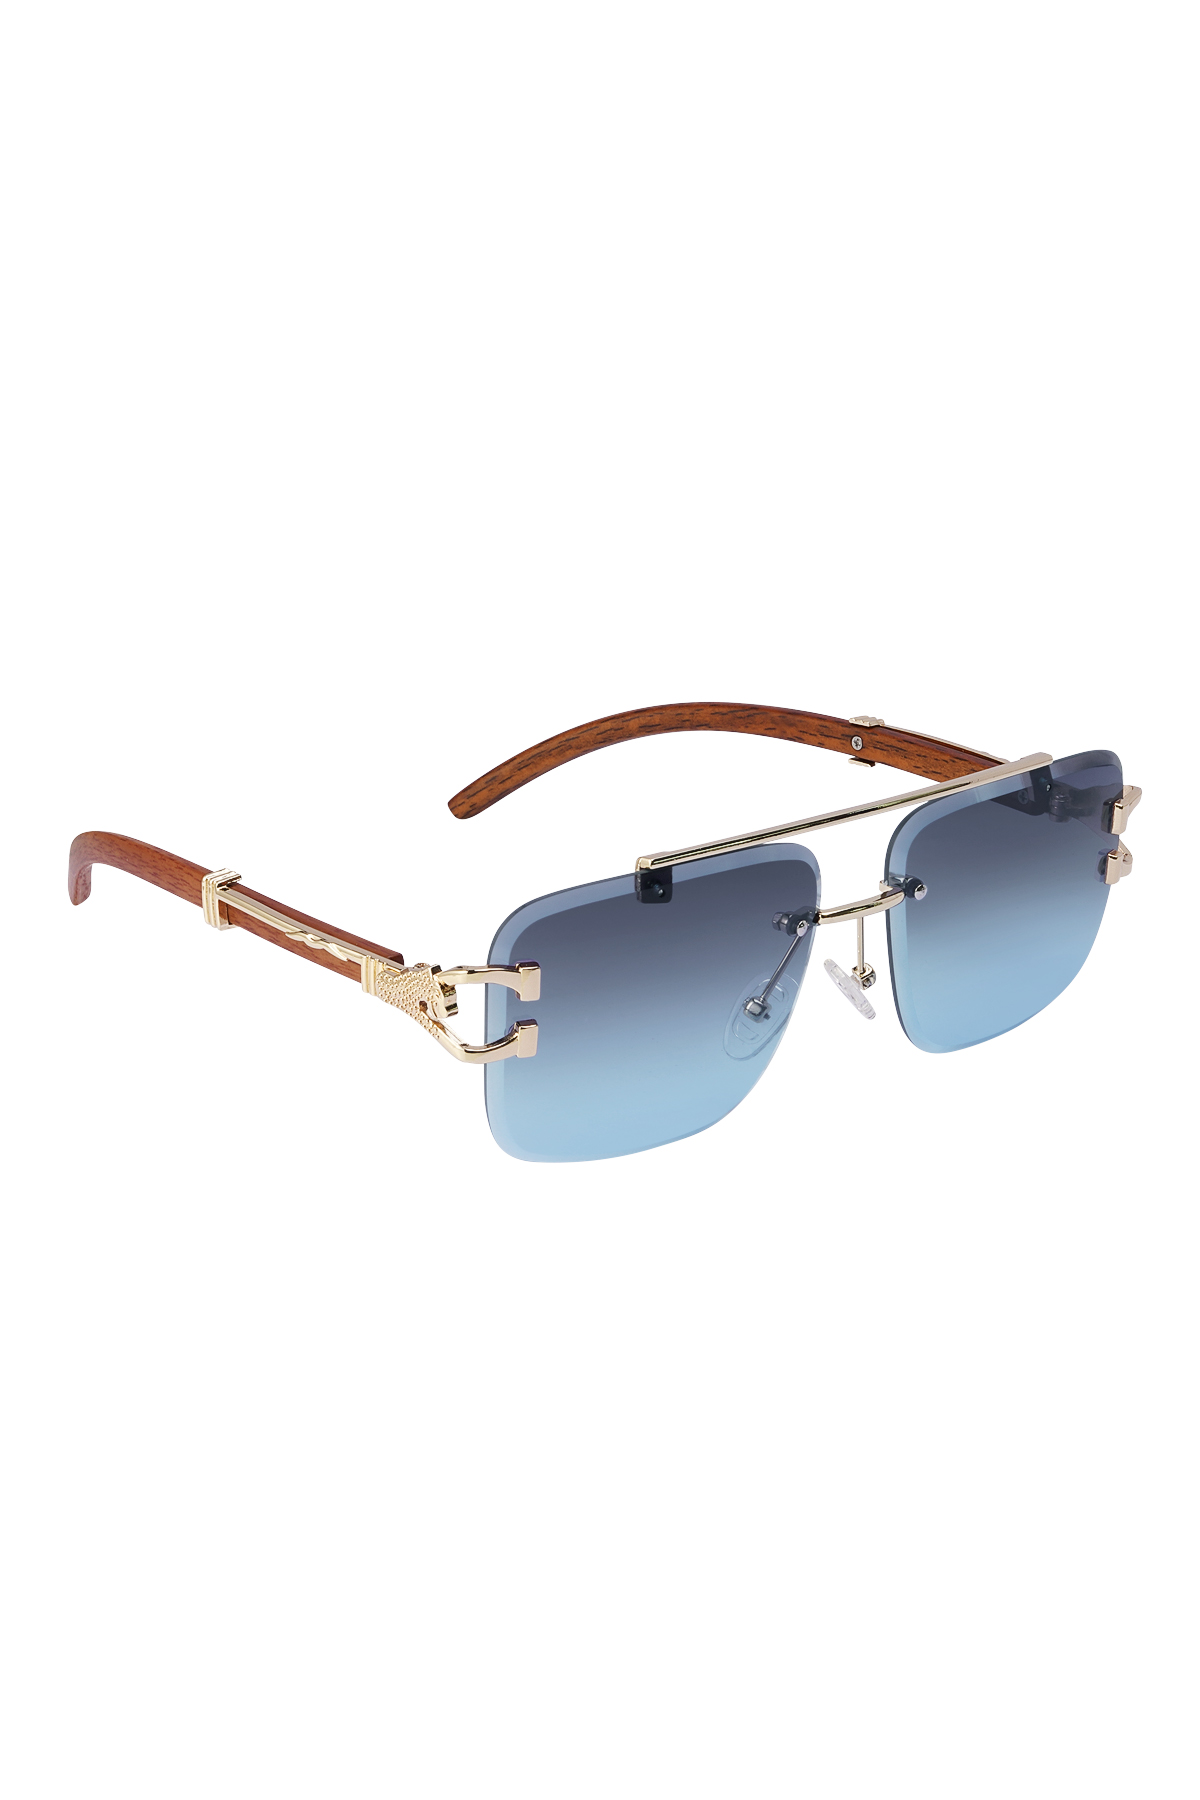 Sonnenbrille Holzdetails Leopard Blau h5 